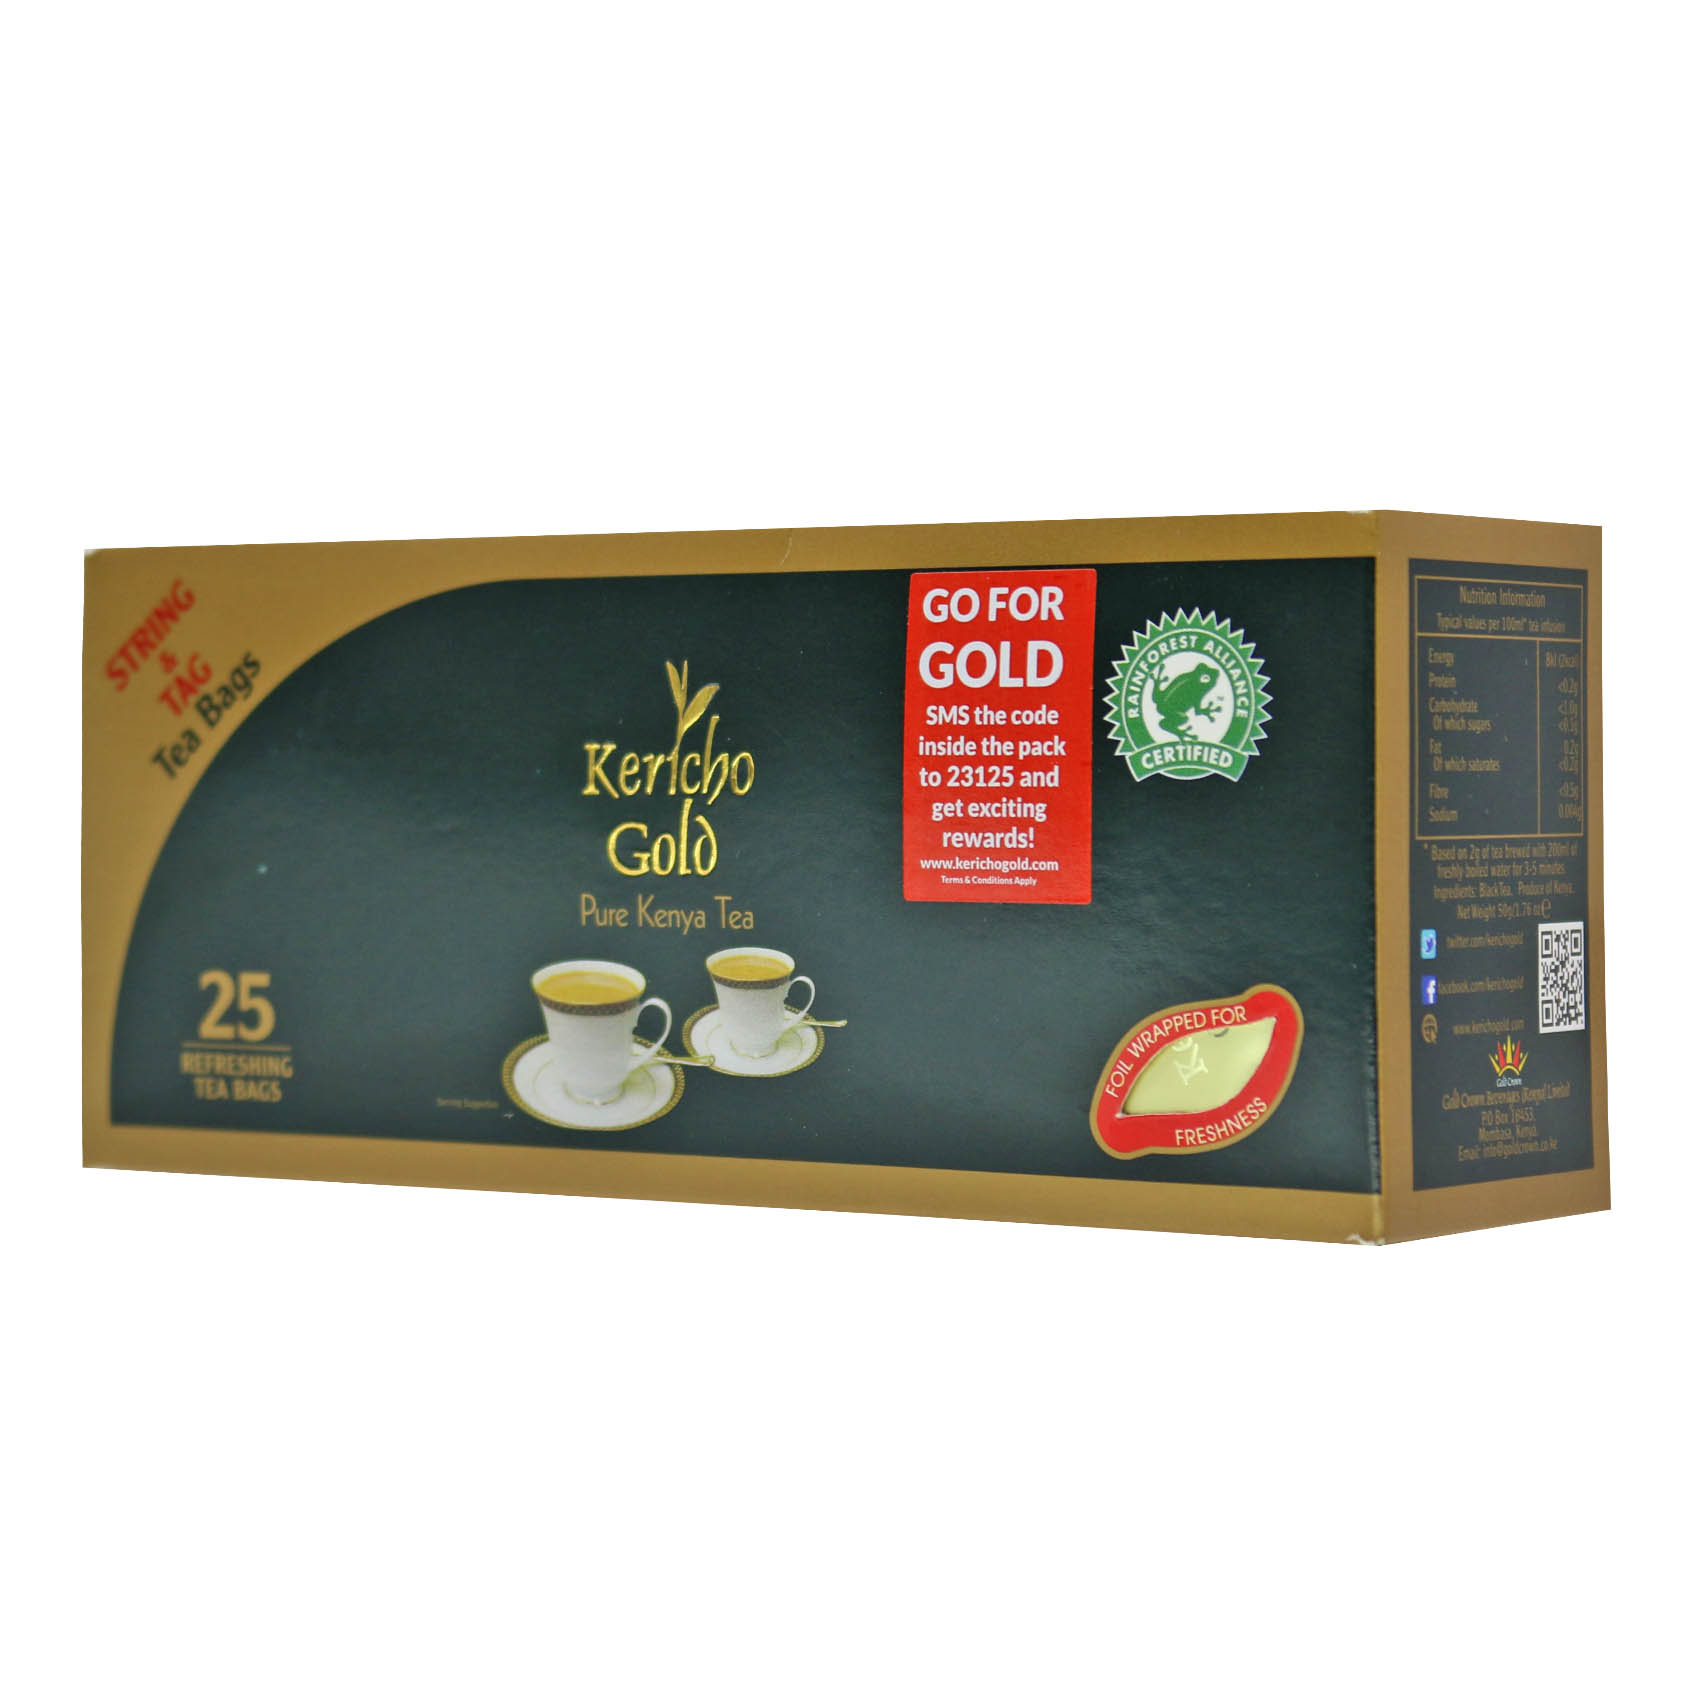 Kericho Gold Pure Kenya String Tea Bags 2g x Pack of 25